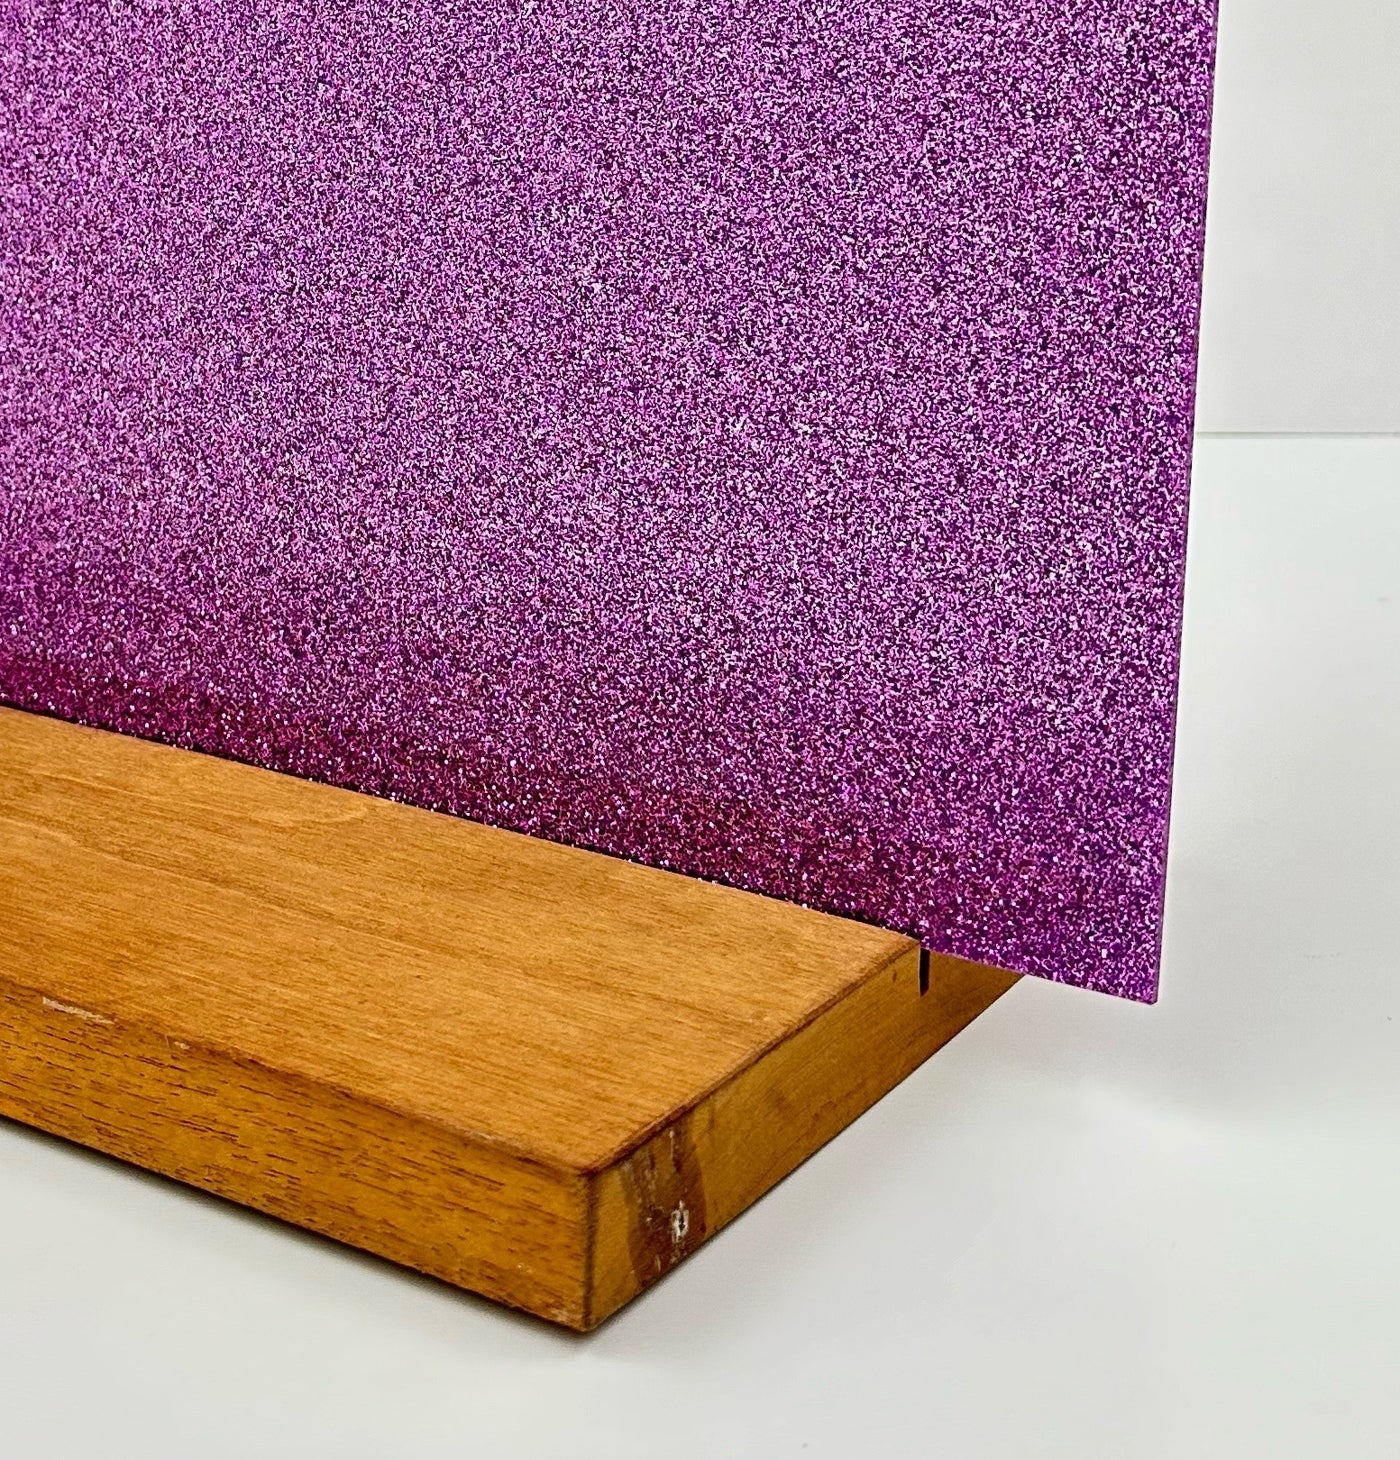 1/8" Purple Glitter Acrylic (per sheet)